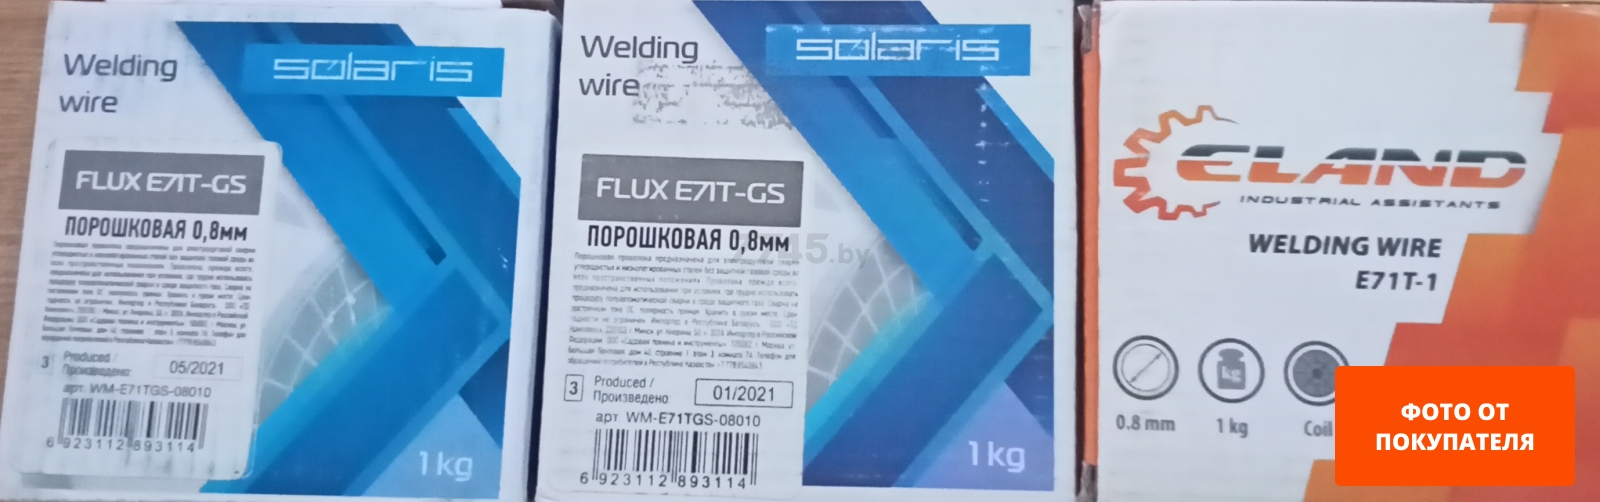 Проволока сварочная 0,8 мм SOLARIS FLUX E71T-GS 1 кг (WM-E71TGS-08010)